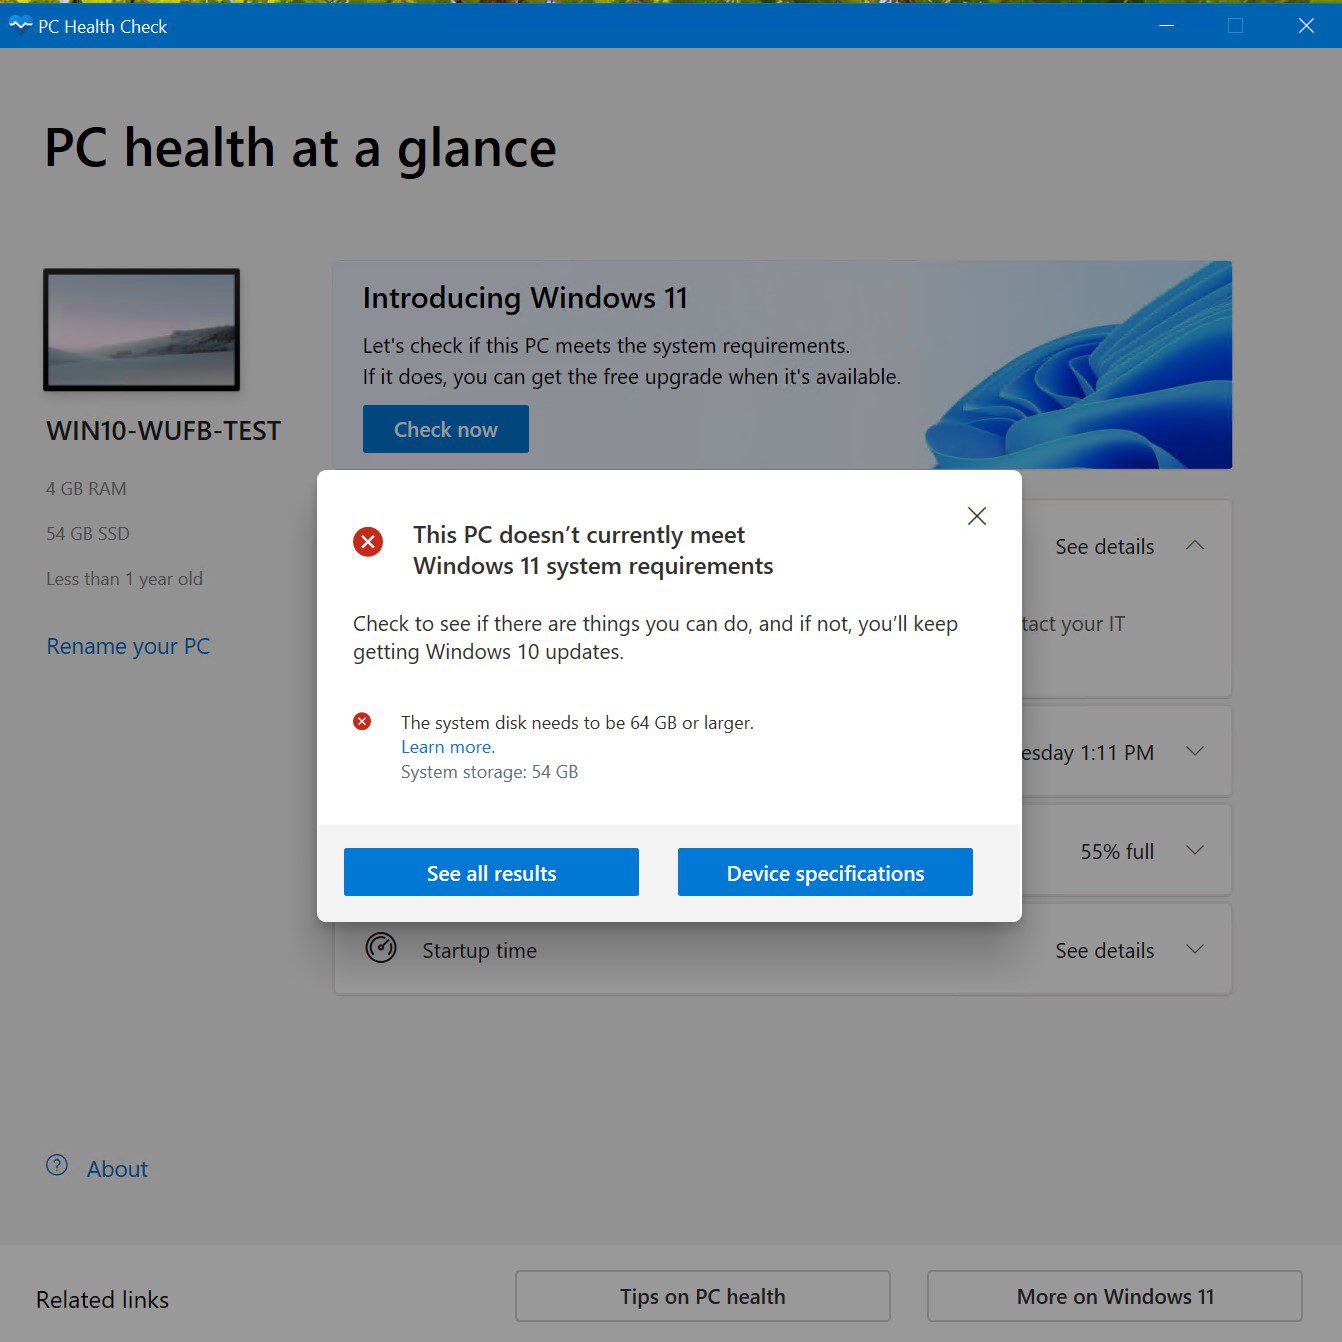 PC Health Check app